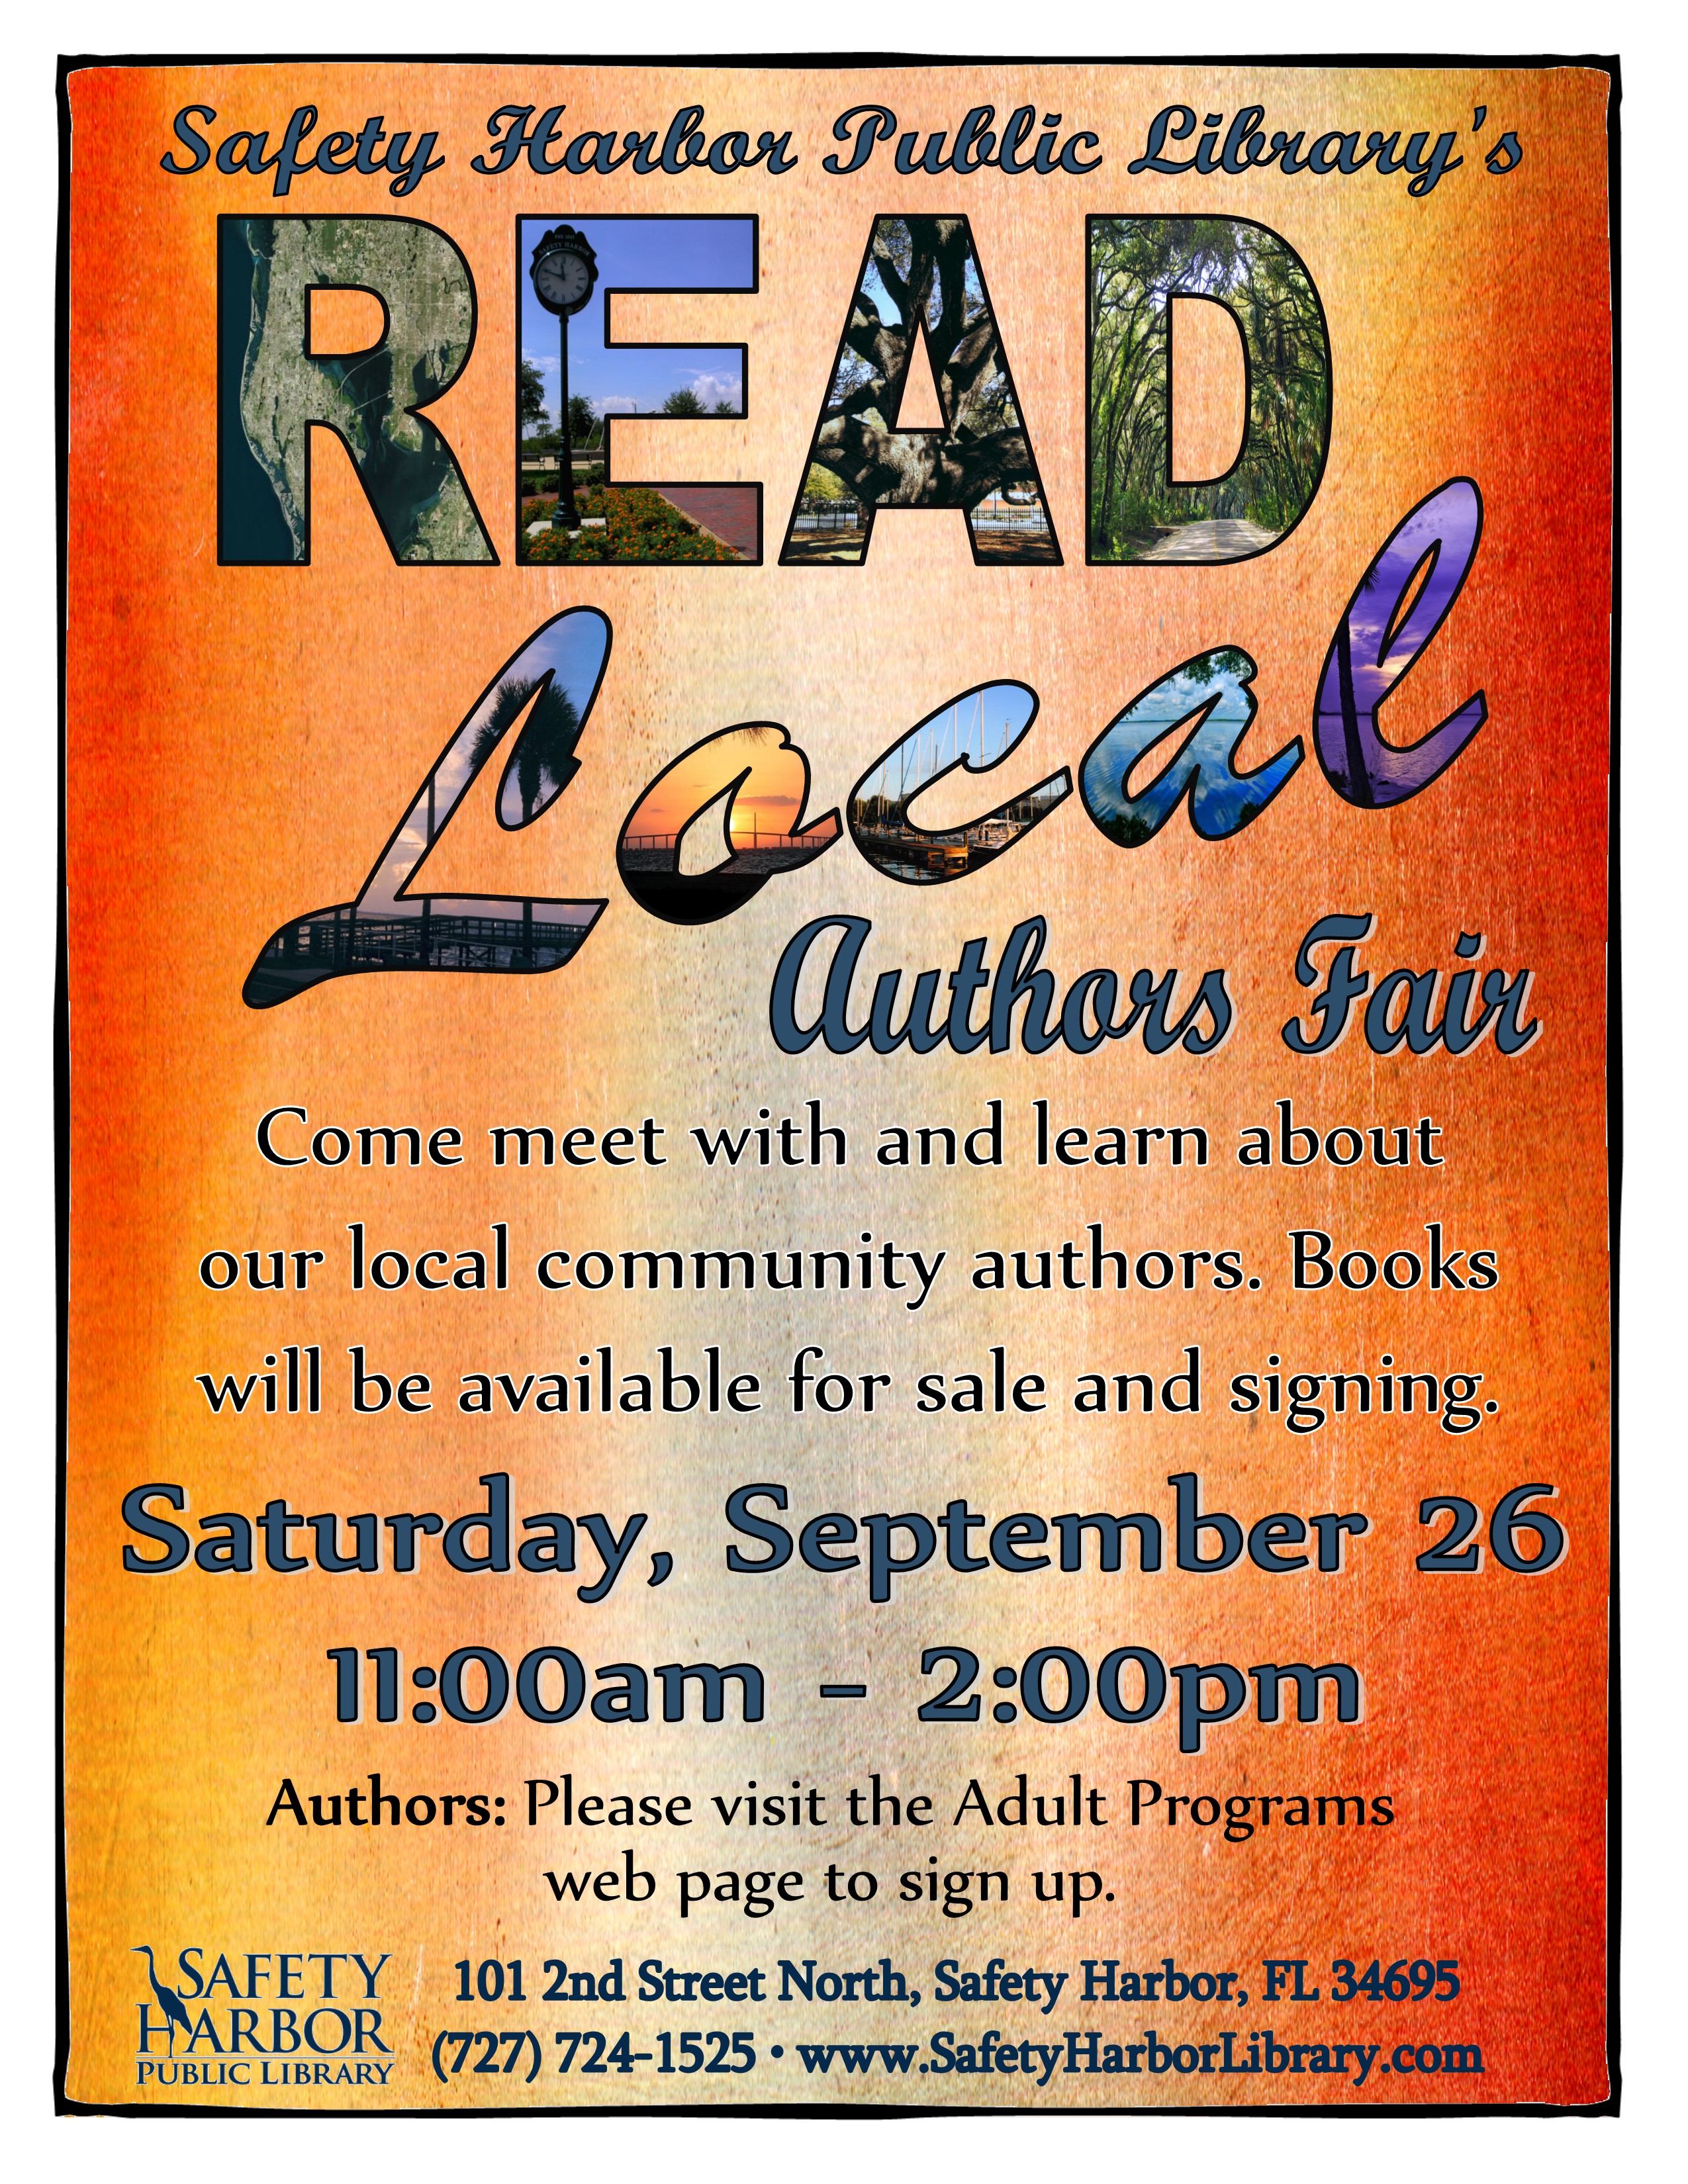 Local Author Book Fair